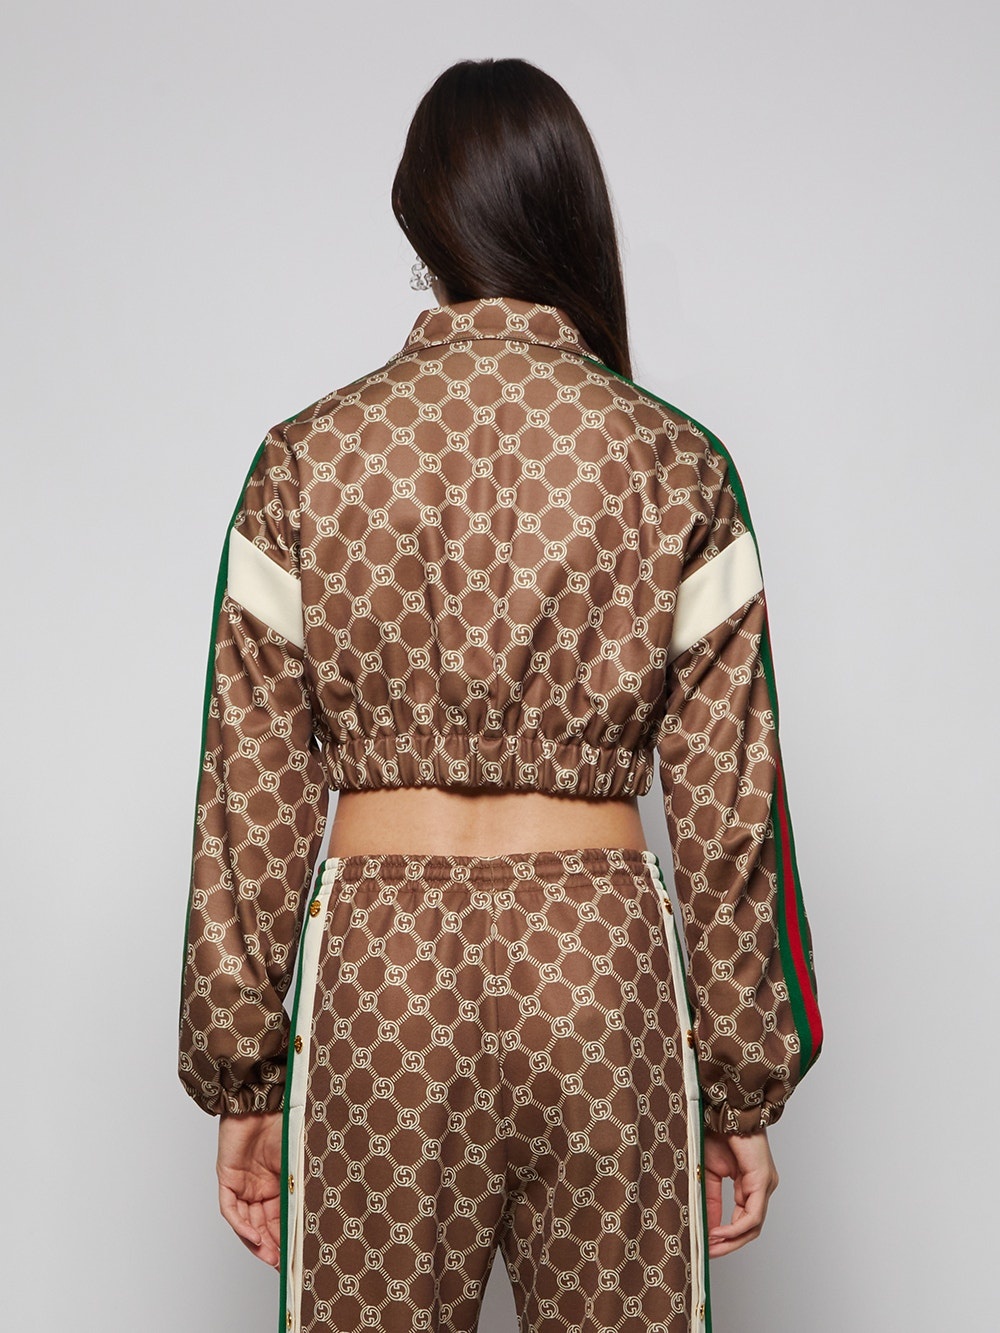 Gucci Interlocking G Zipper Jacket, Size XXS, Beige, Ready-to-wear